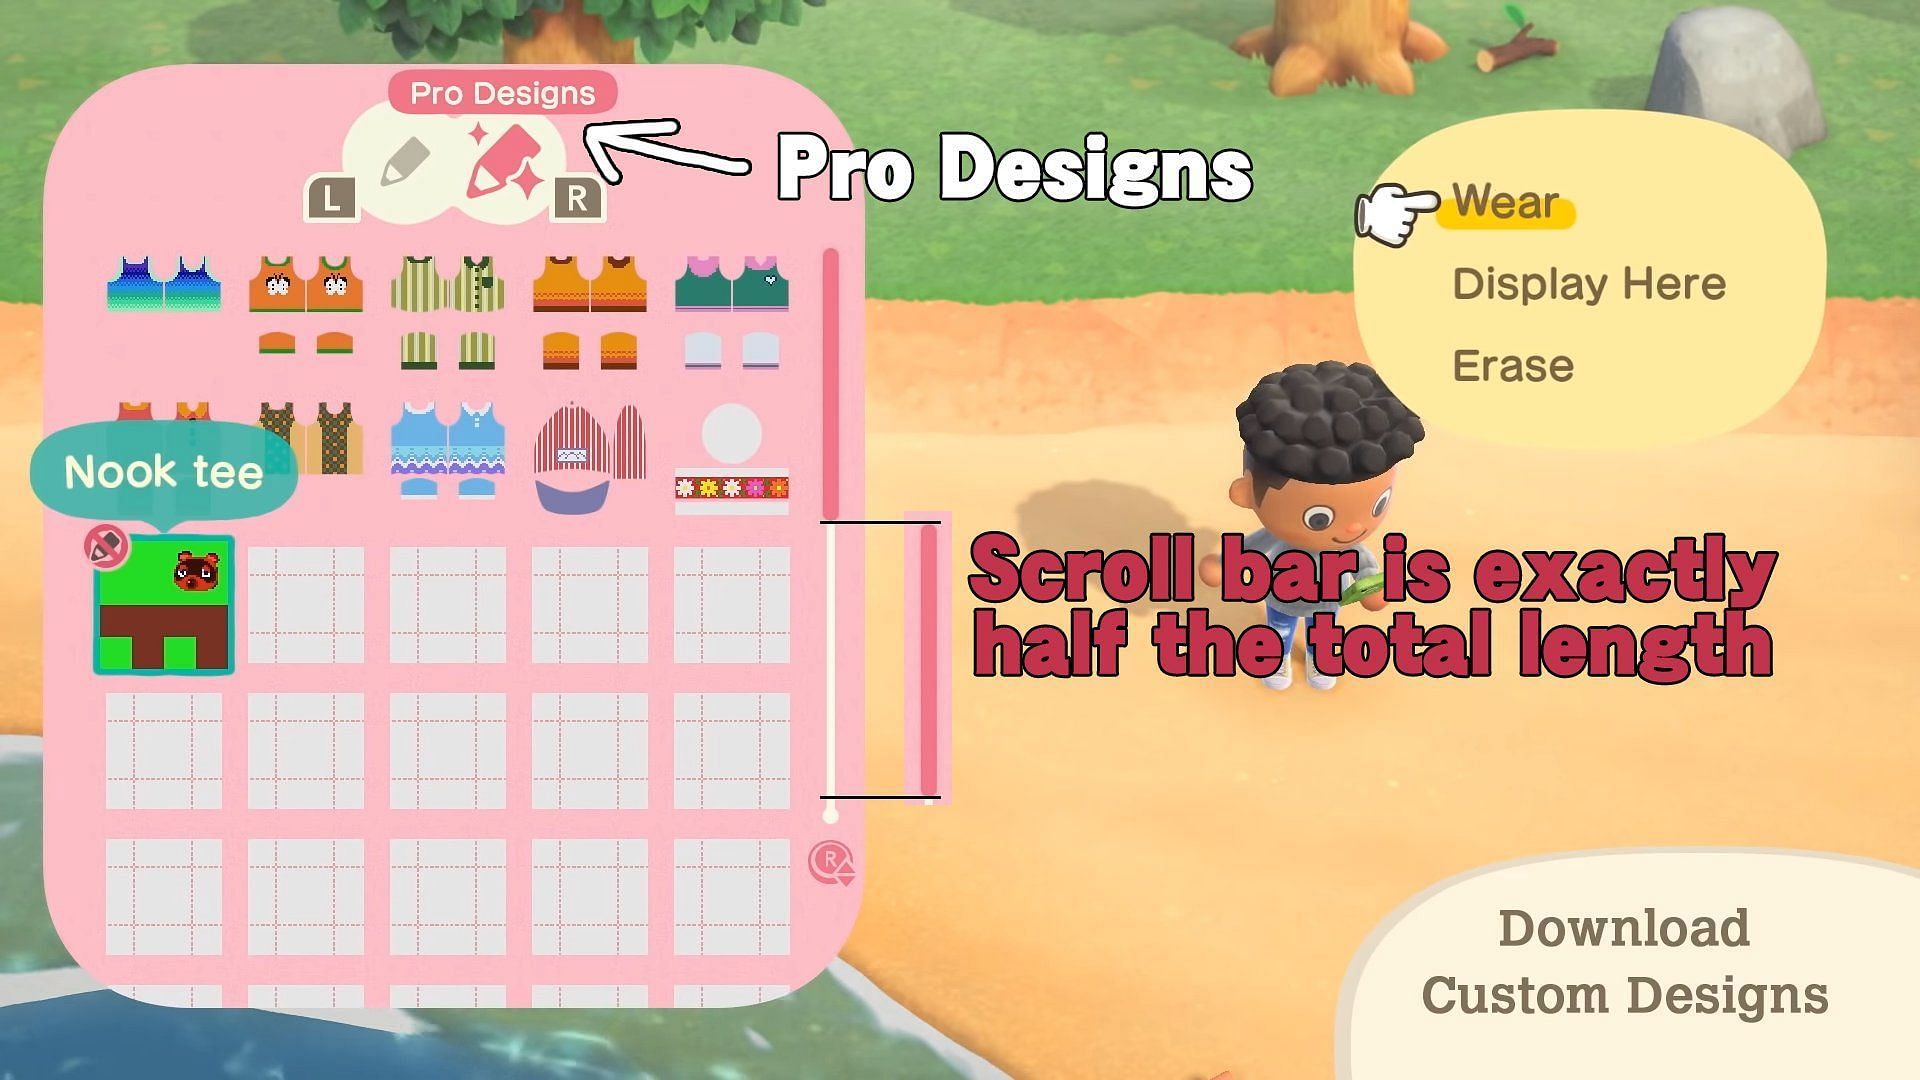 Steps to get more custom design slots in Animal Crossing: New Horizons (Image via PJiggles/Twitter)